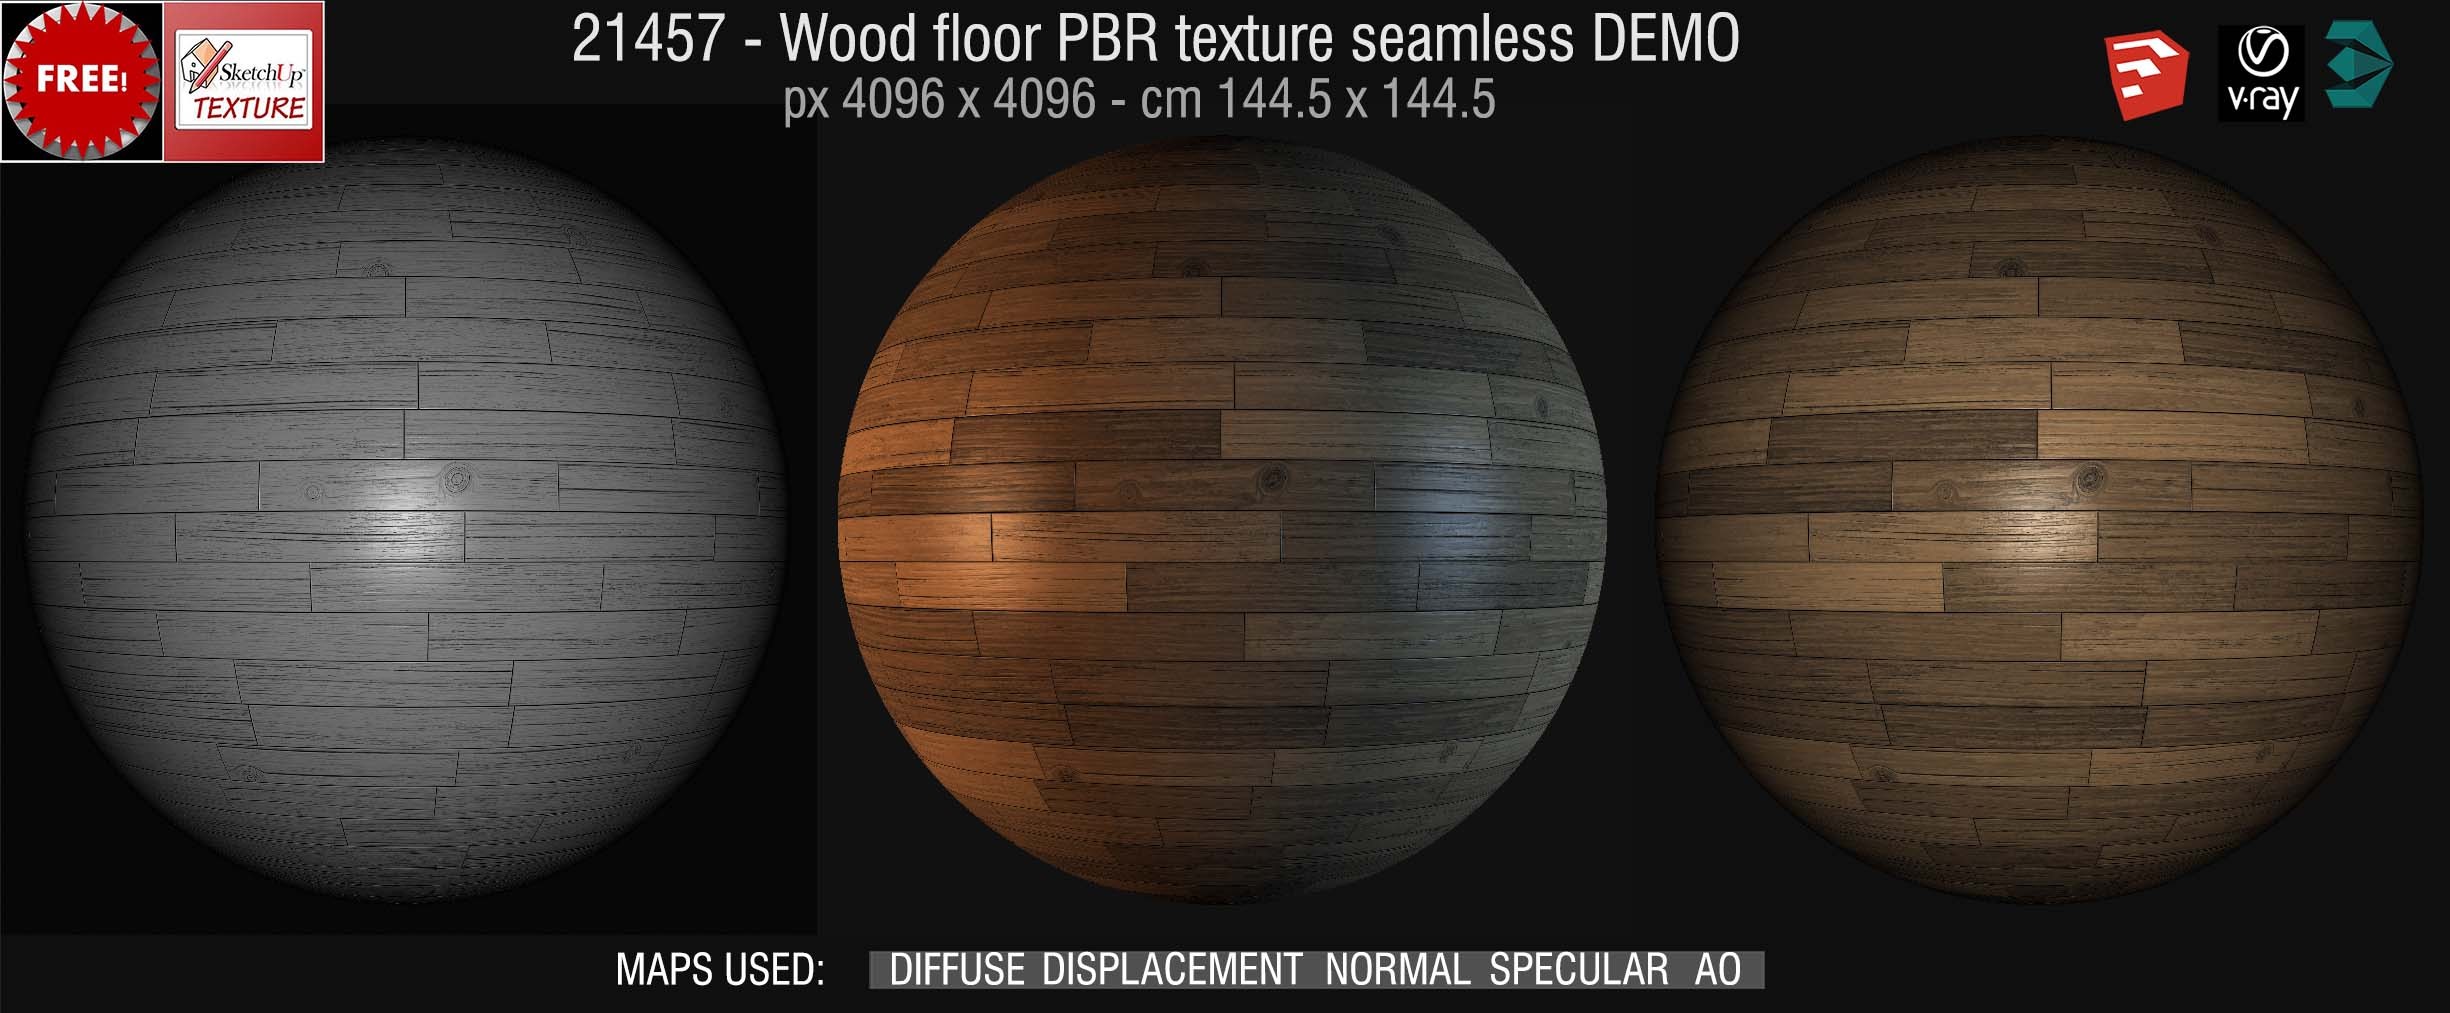 21457 wood floor PBR texture seamless DEMO